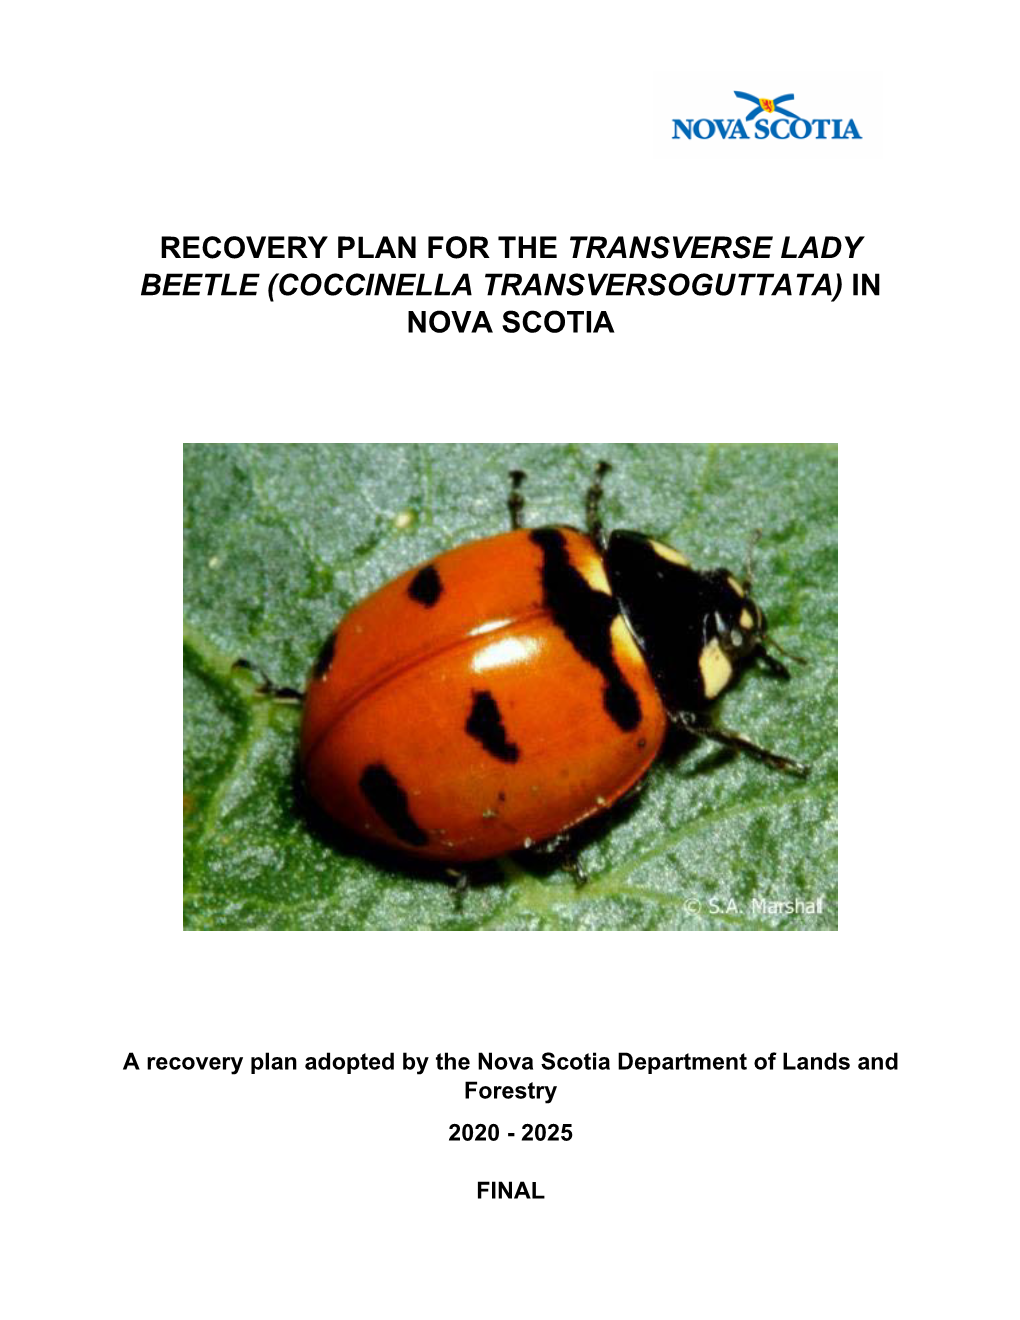 Recovery Plan for the Transverse Lady Beetle (Coccinella Transversoguttata) in Nova Scotia